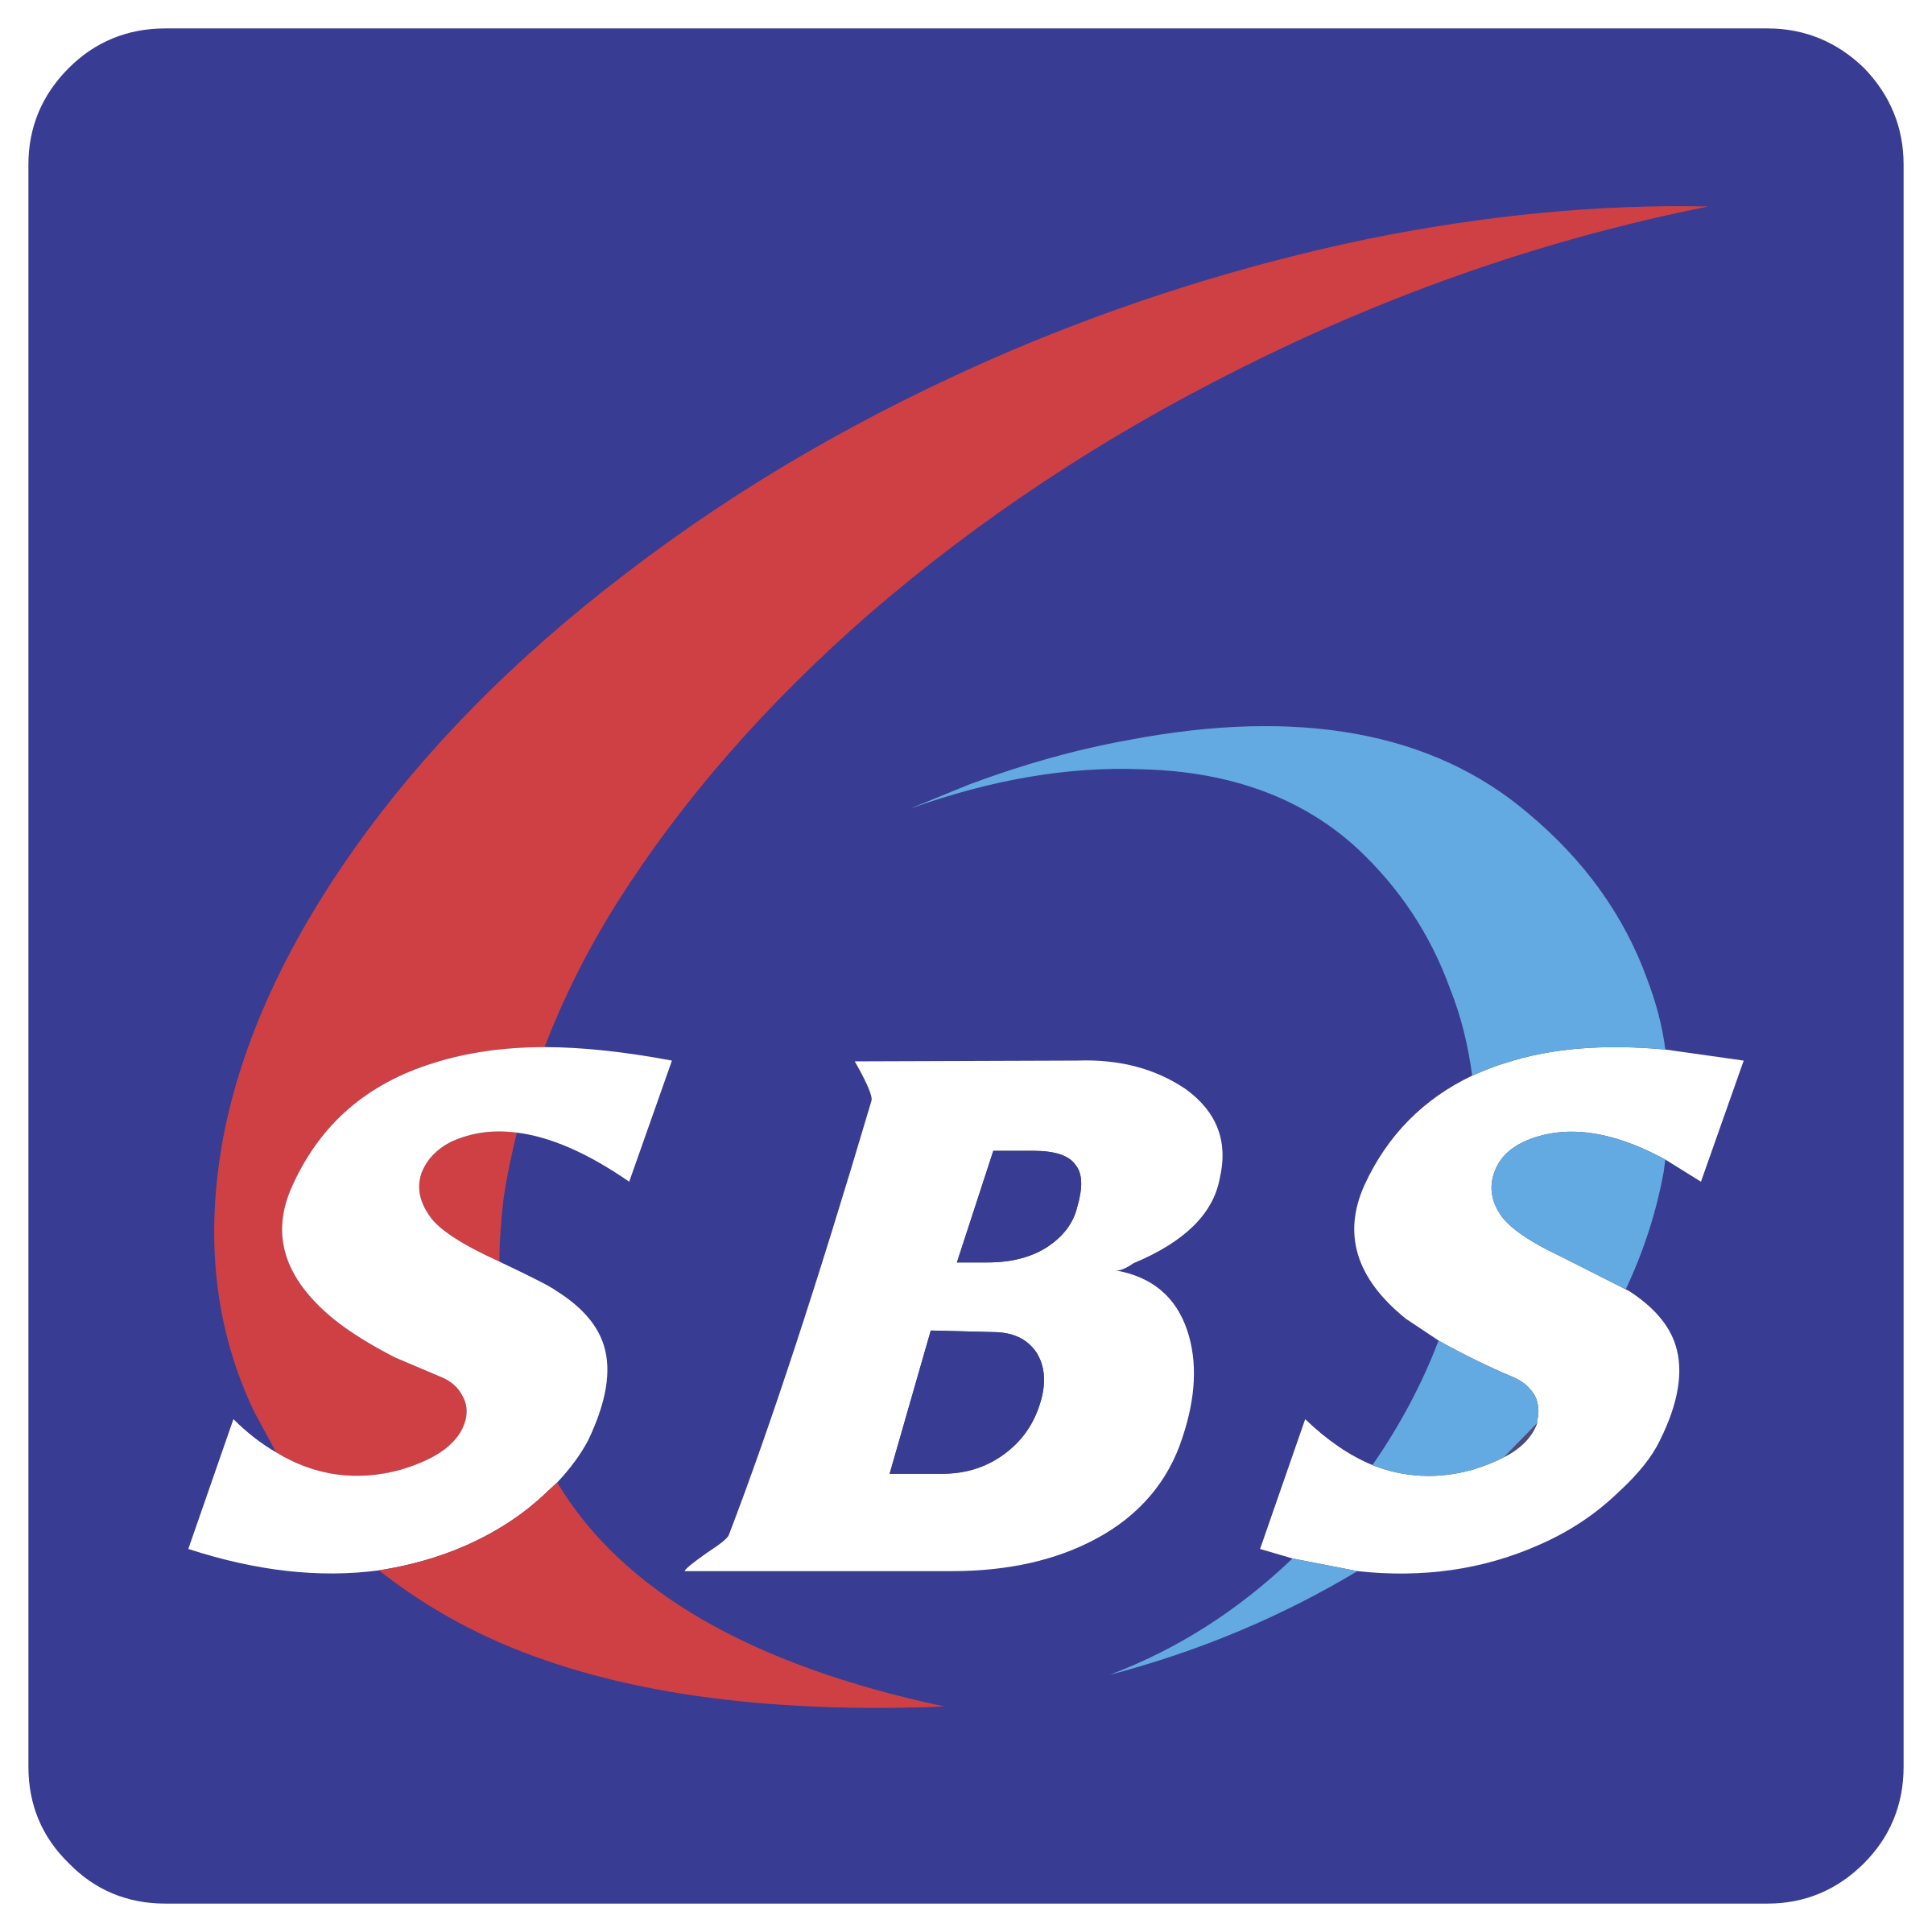 SBS Logo - SBS 6 Logo PNG Transparent & SVG Vector - Freebie Supply